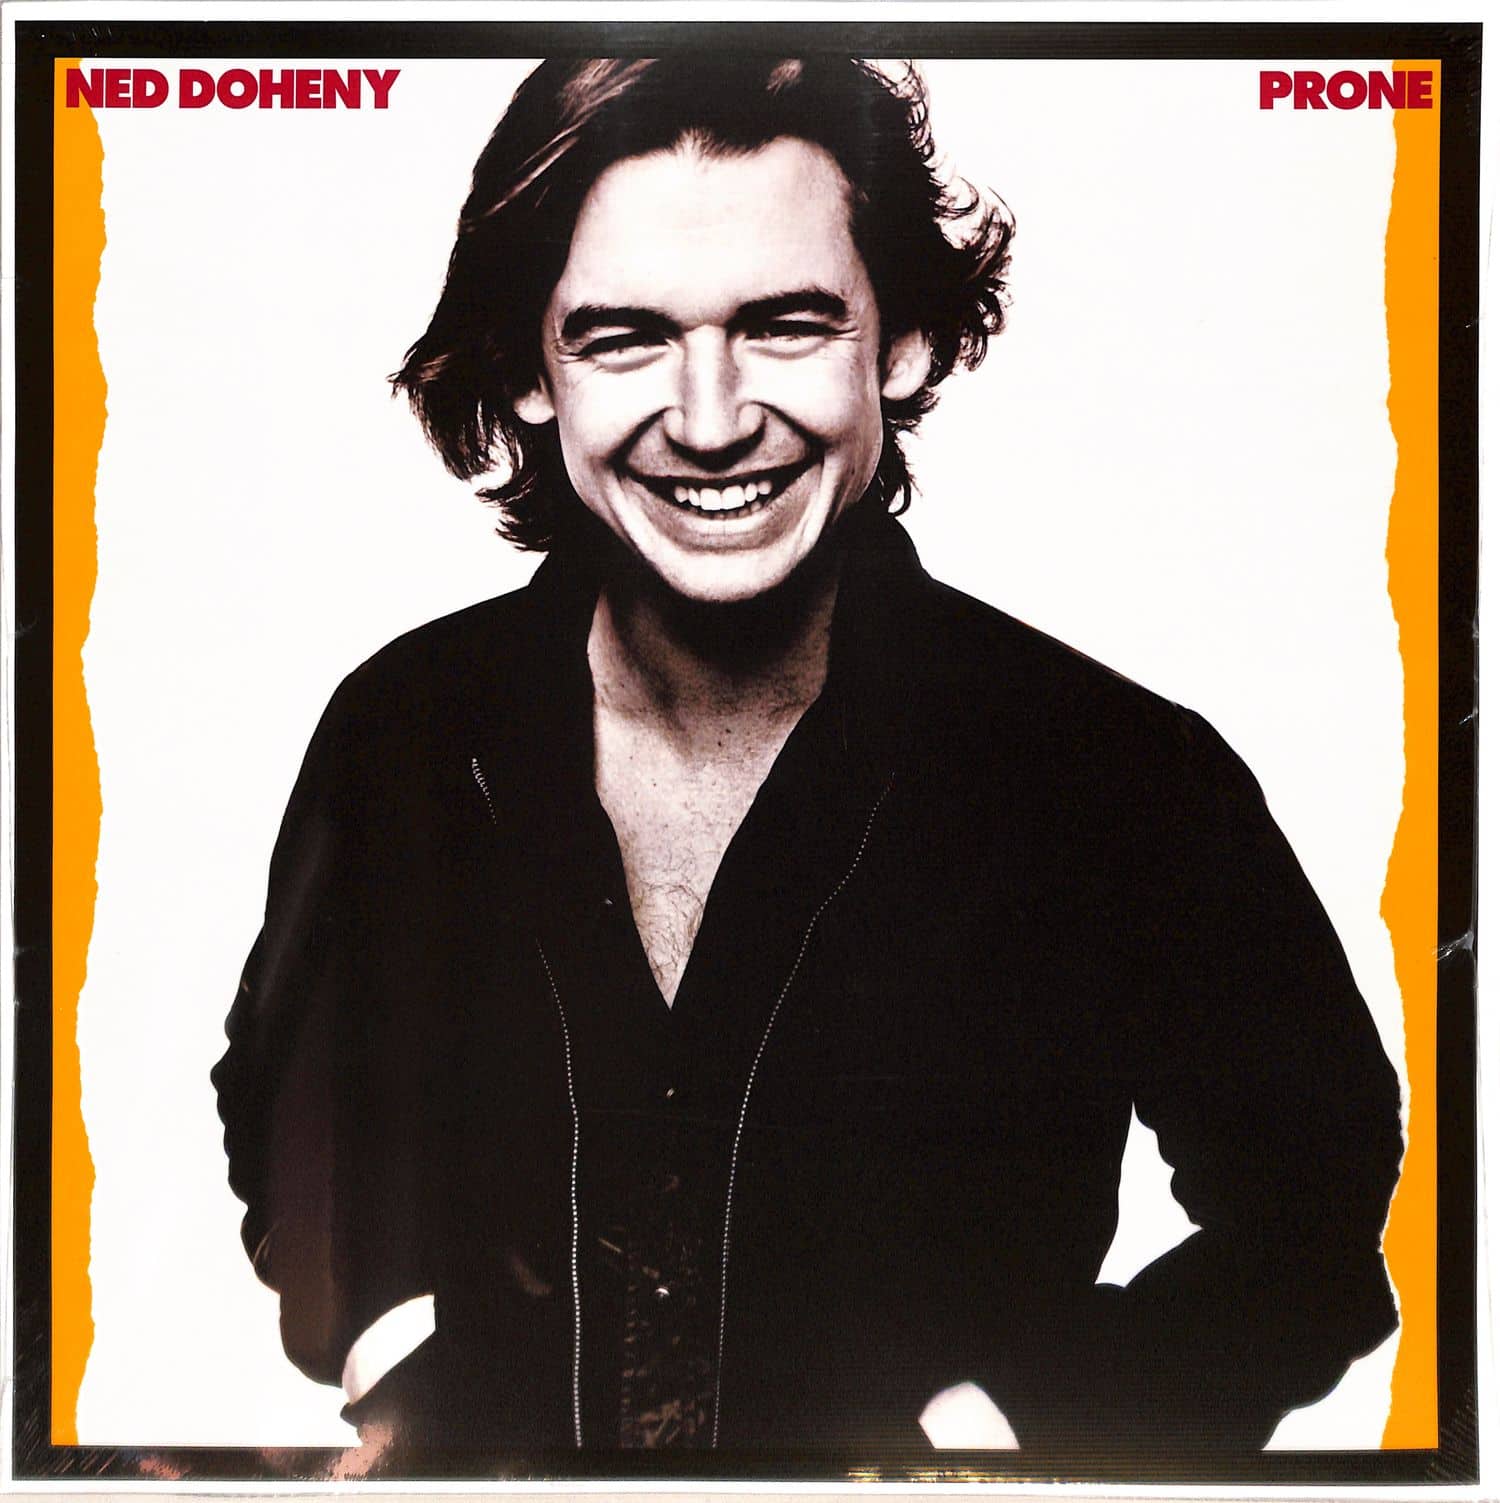 Ned Doheny - PRONE 